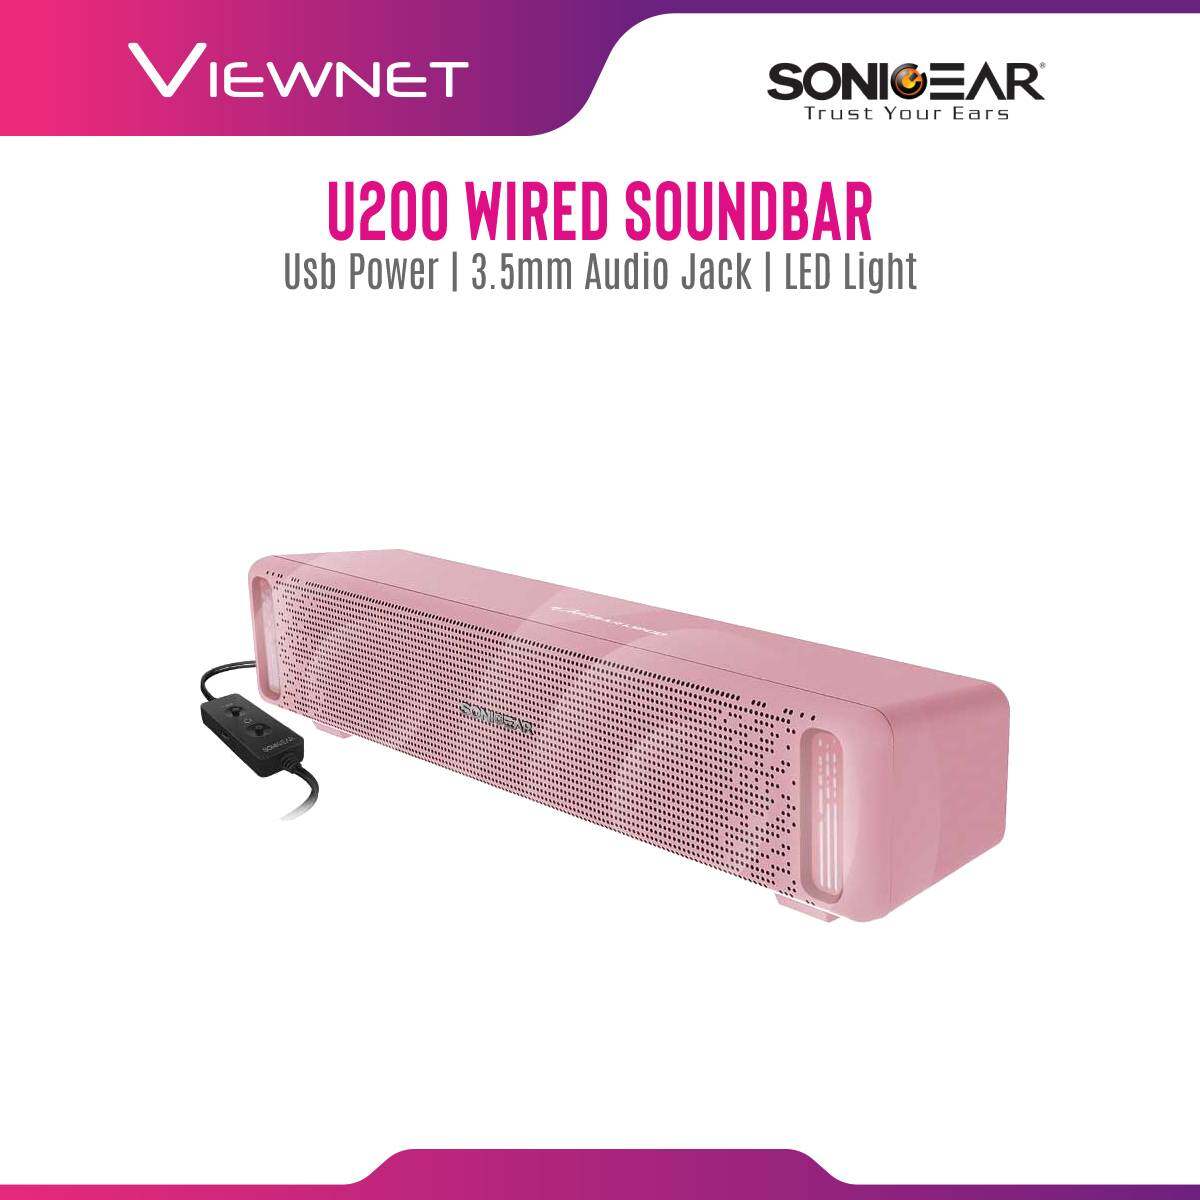 SonicGear U200 3.5mm Wired Soundbar with Usb Power , 3.5mm Audio Jack , Led Light Effect